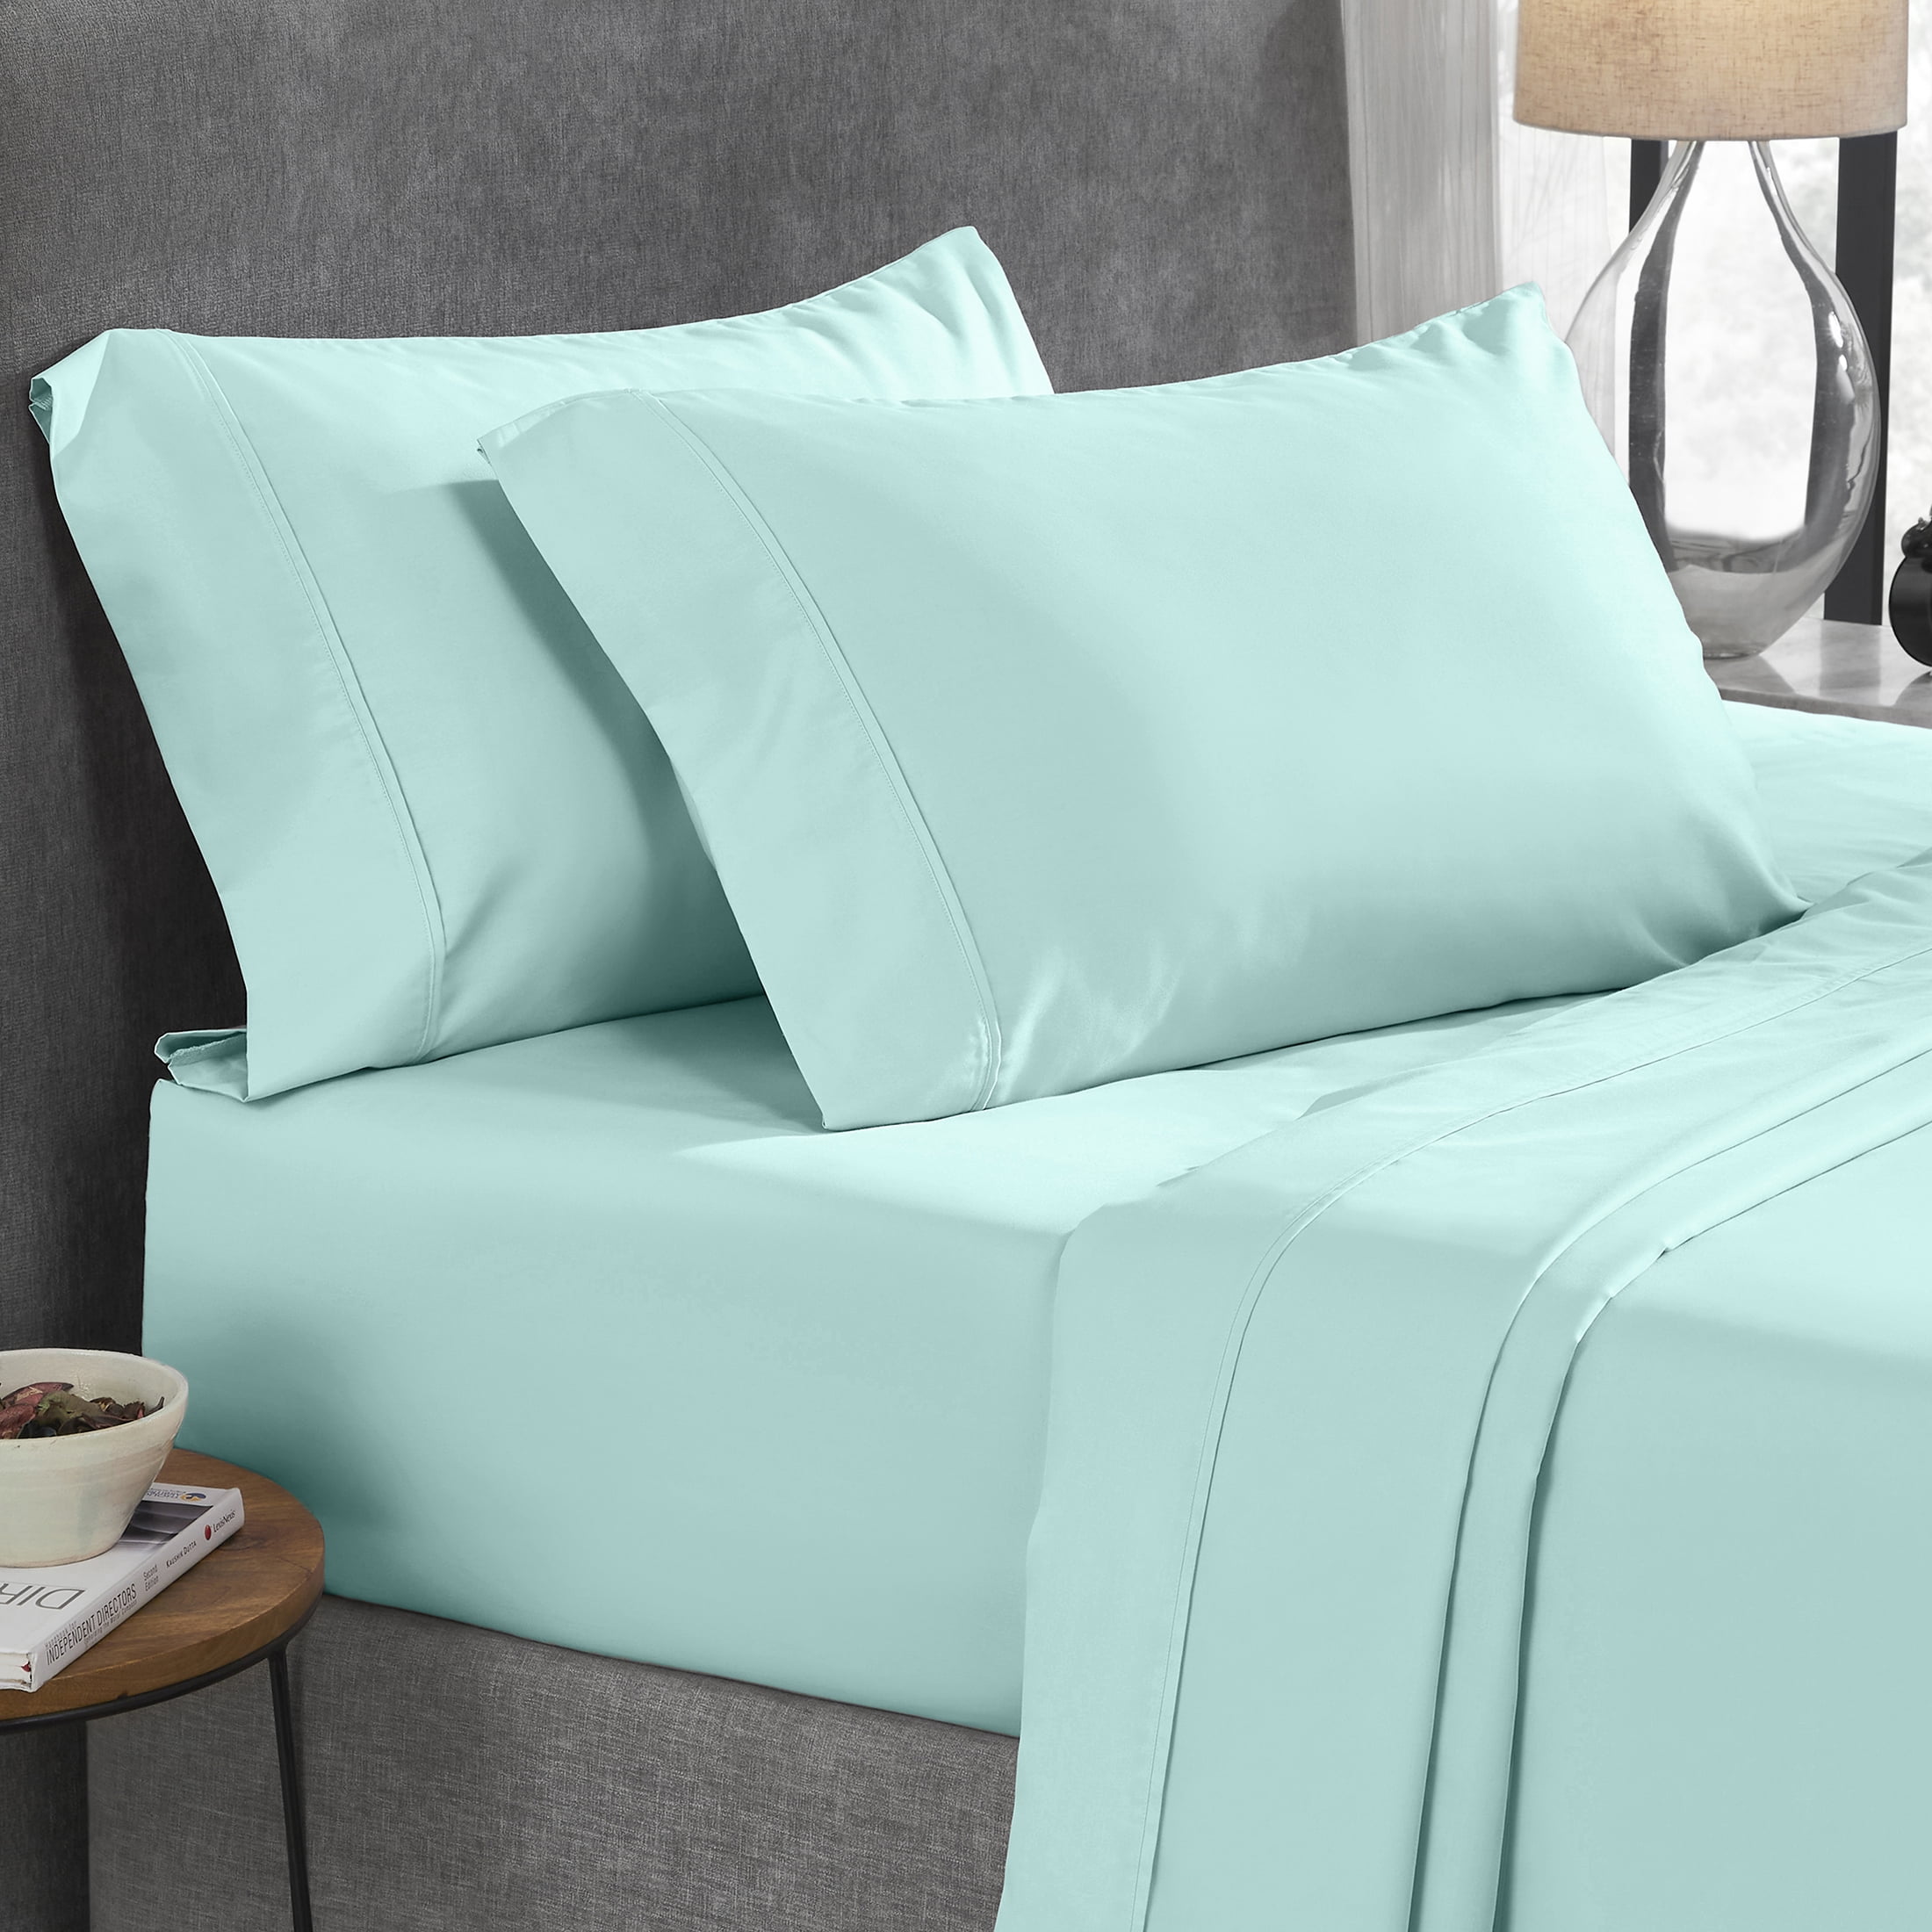 100% Percale Cotton 4pc Pillow Bed Sheet Set Beige/Ivory 400 Tc Super Deep 